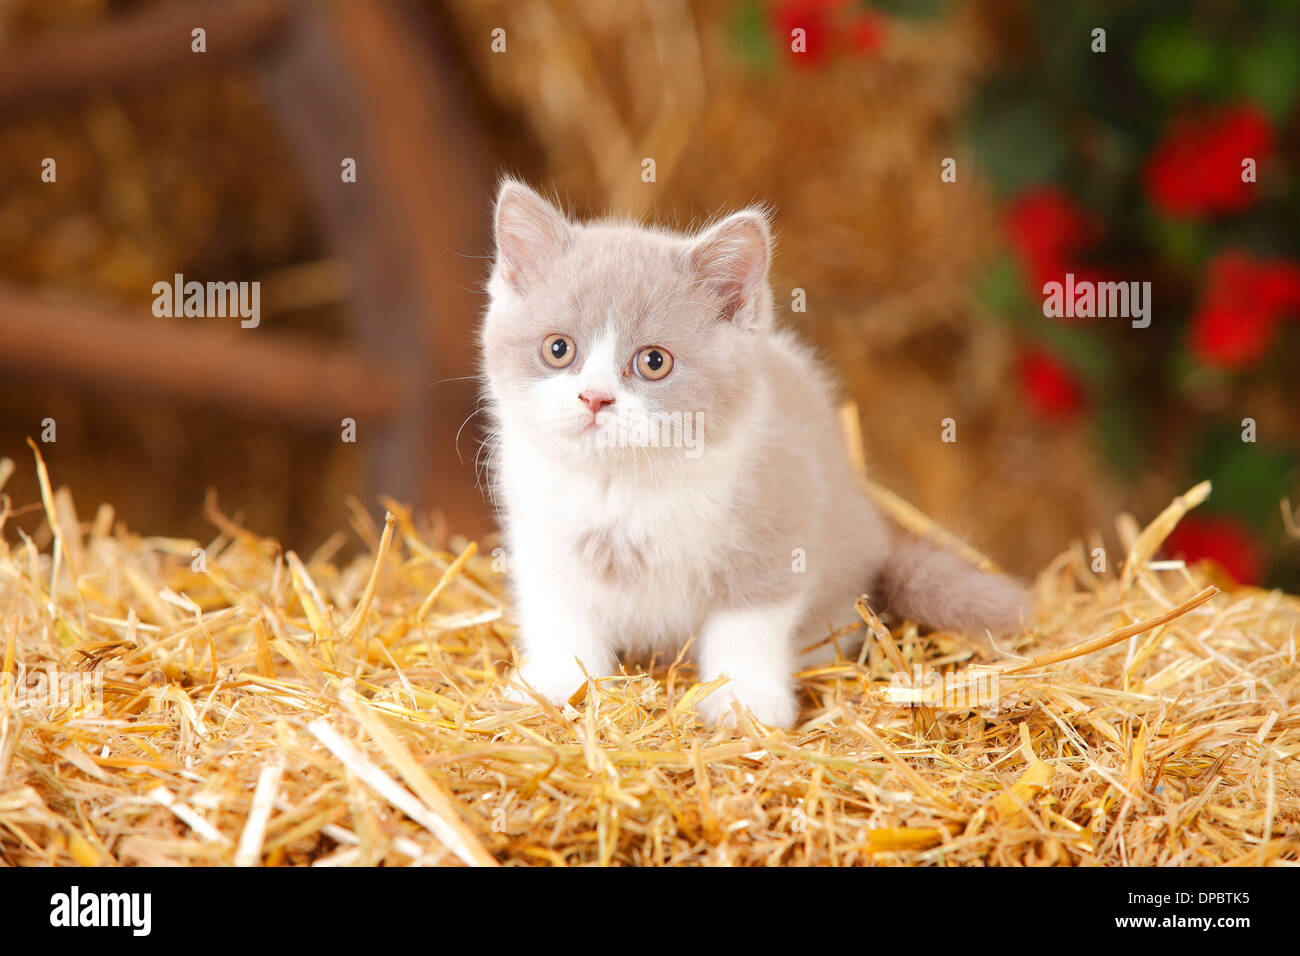 https://c8.alamy.com/comp/DPBTK5/british-shorthair-kitten-sitting-at-hay-DPBTK5.jpg